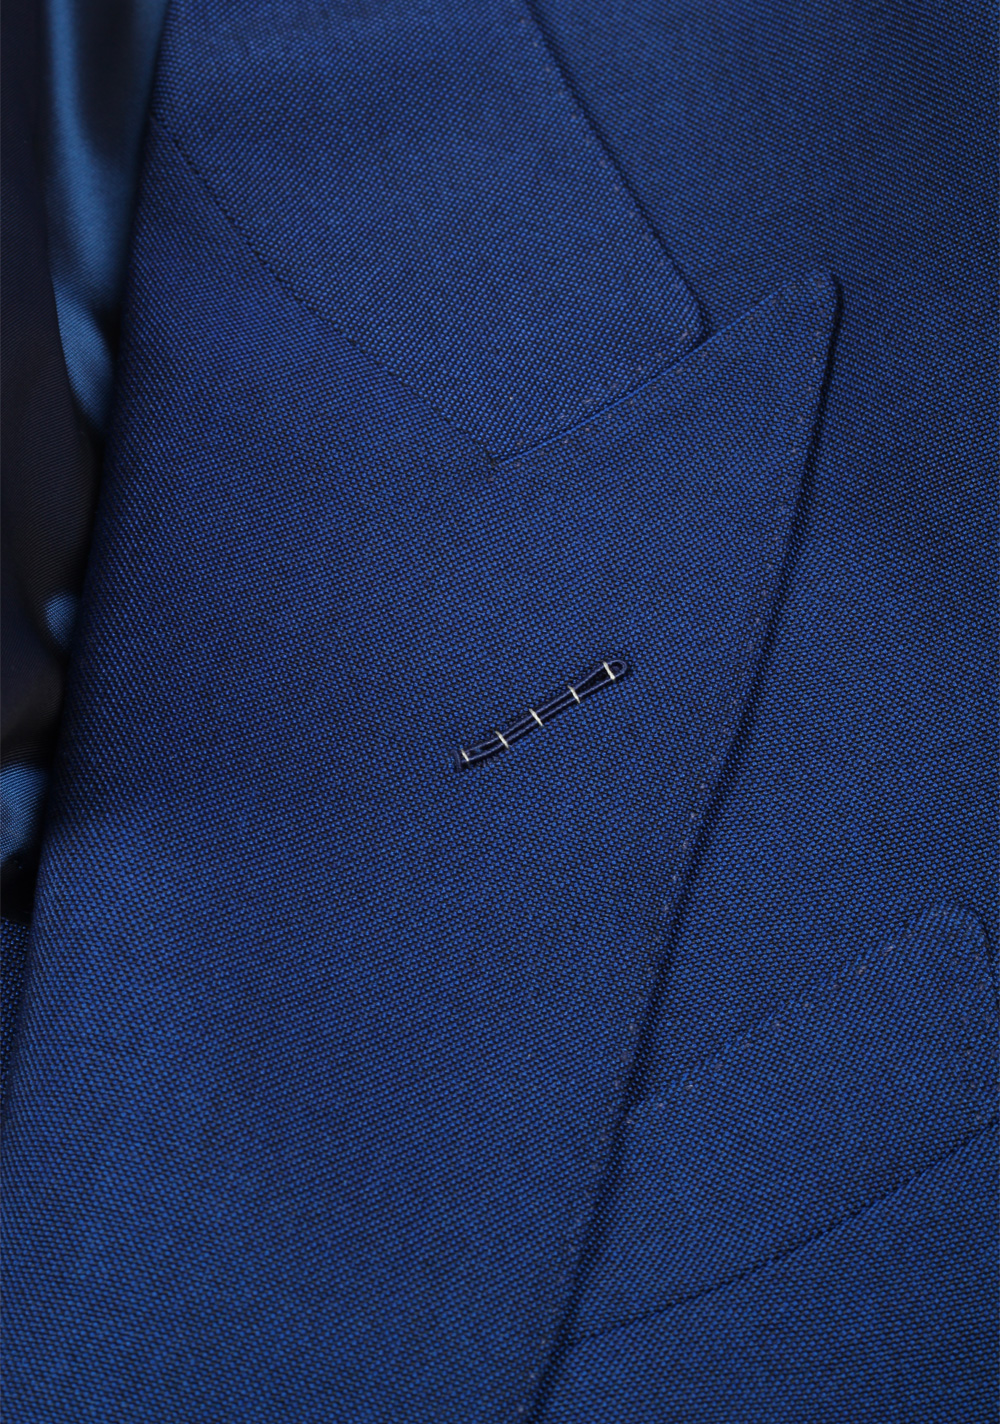 TOM FORD Shelton Blue Suit Size 50 / 40R U.S. In Mohair | Costume Limité